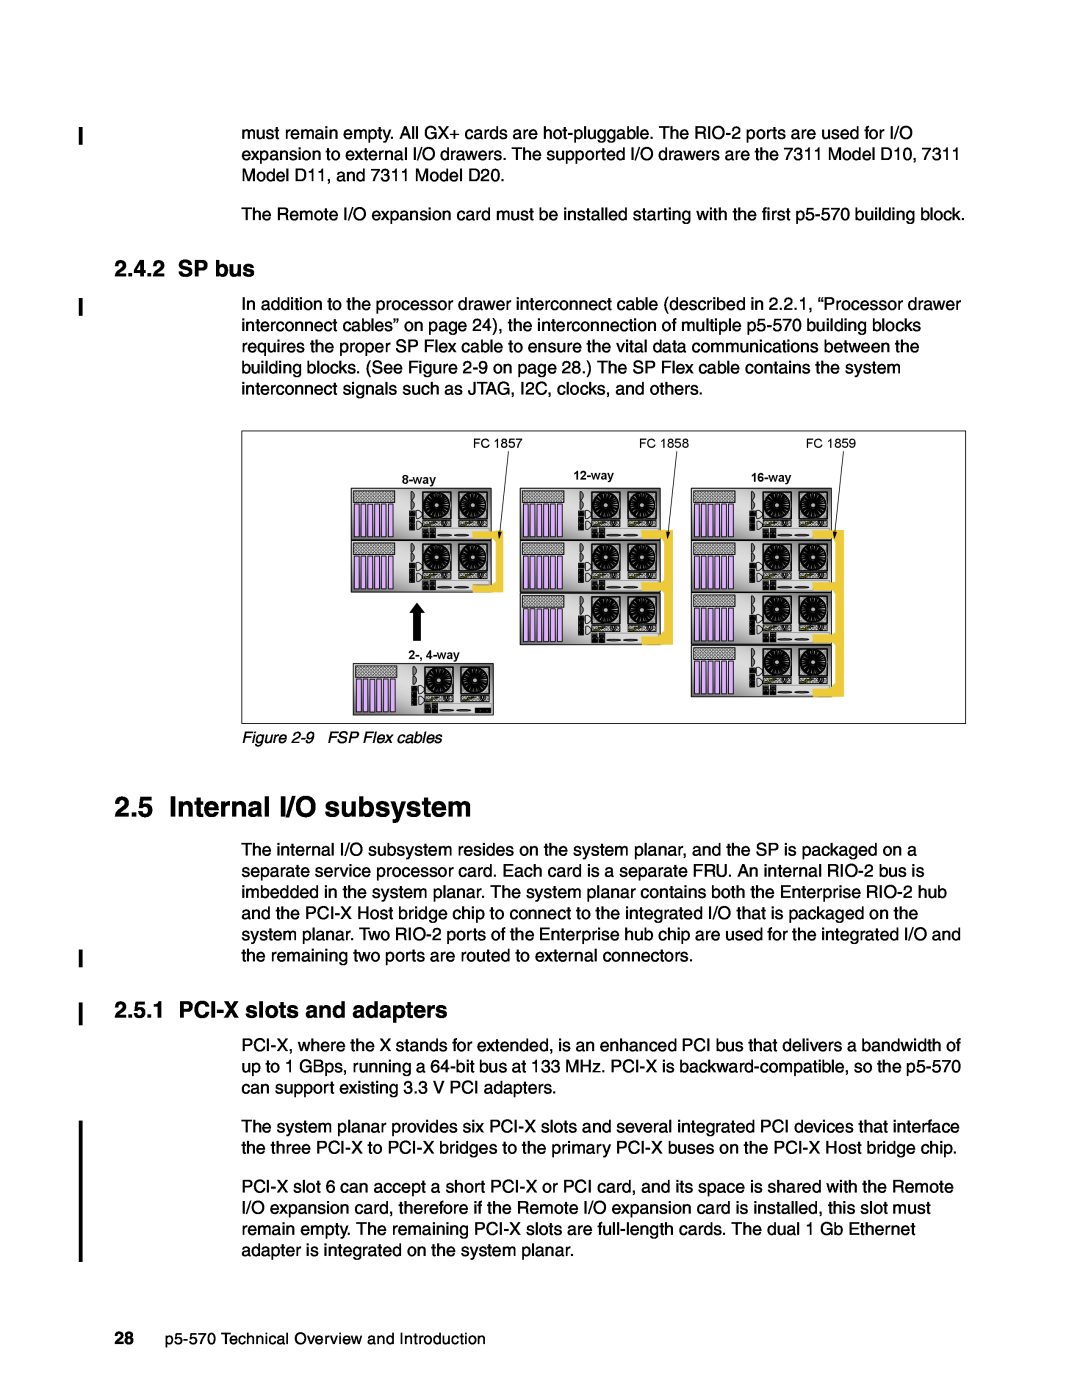 IBM P5 570 manual Internal I/O subsystem, SP bus, PCI-Xslots and adapters 